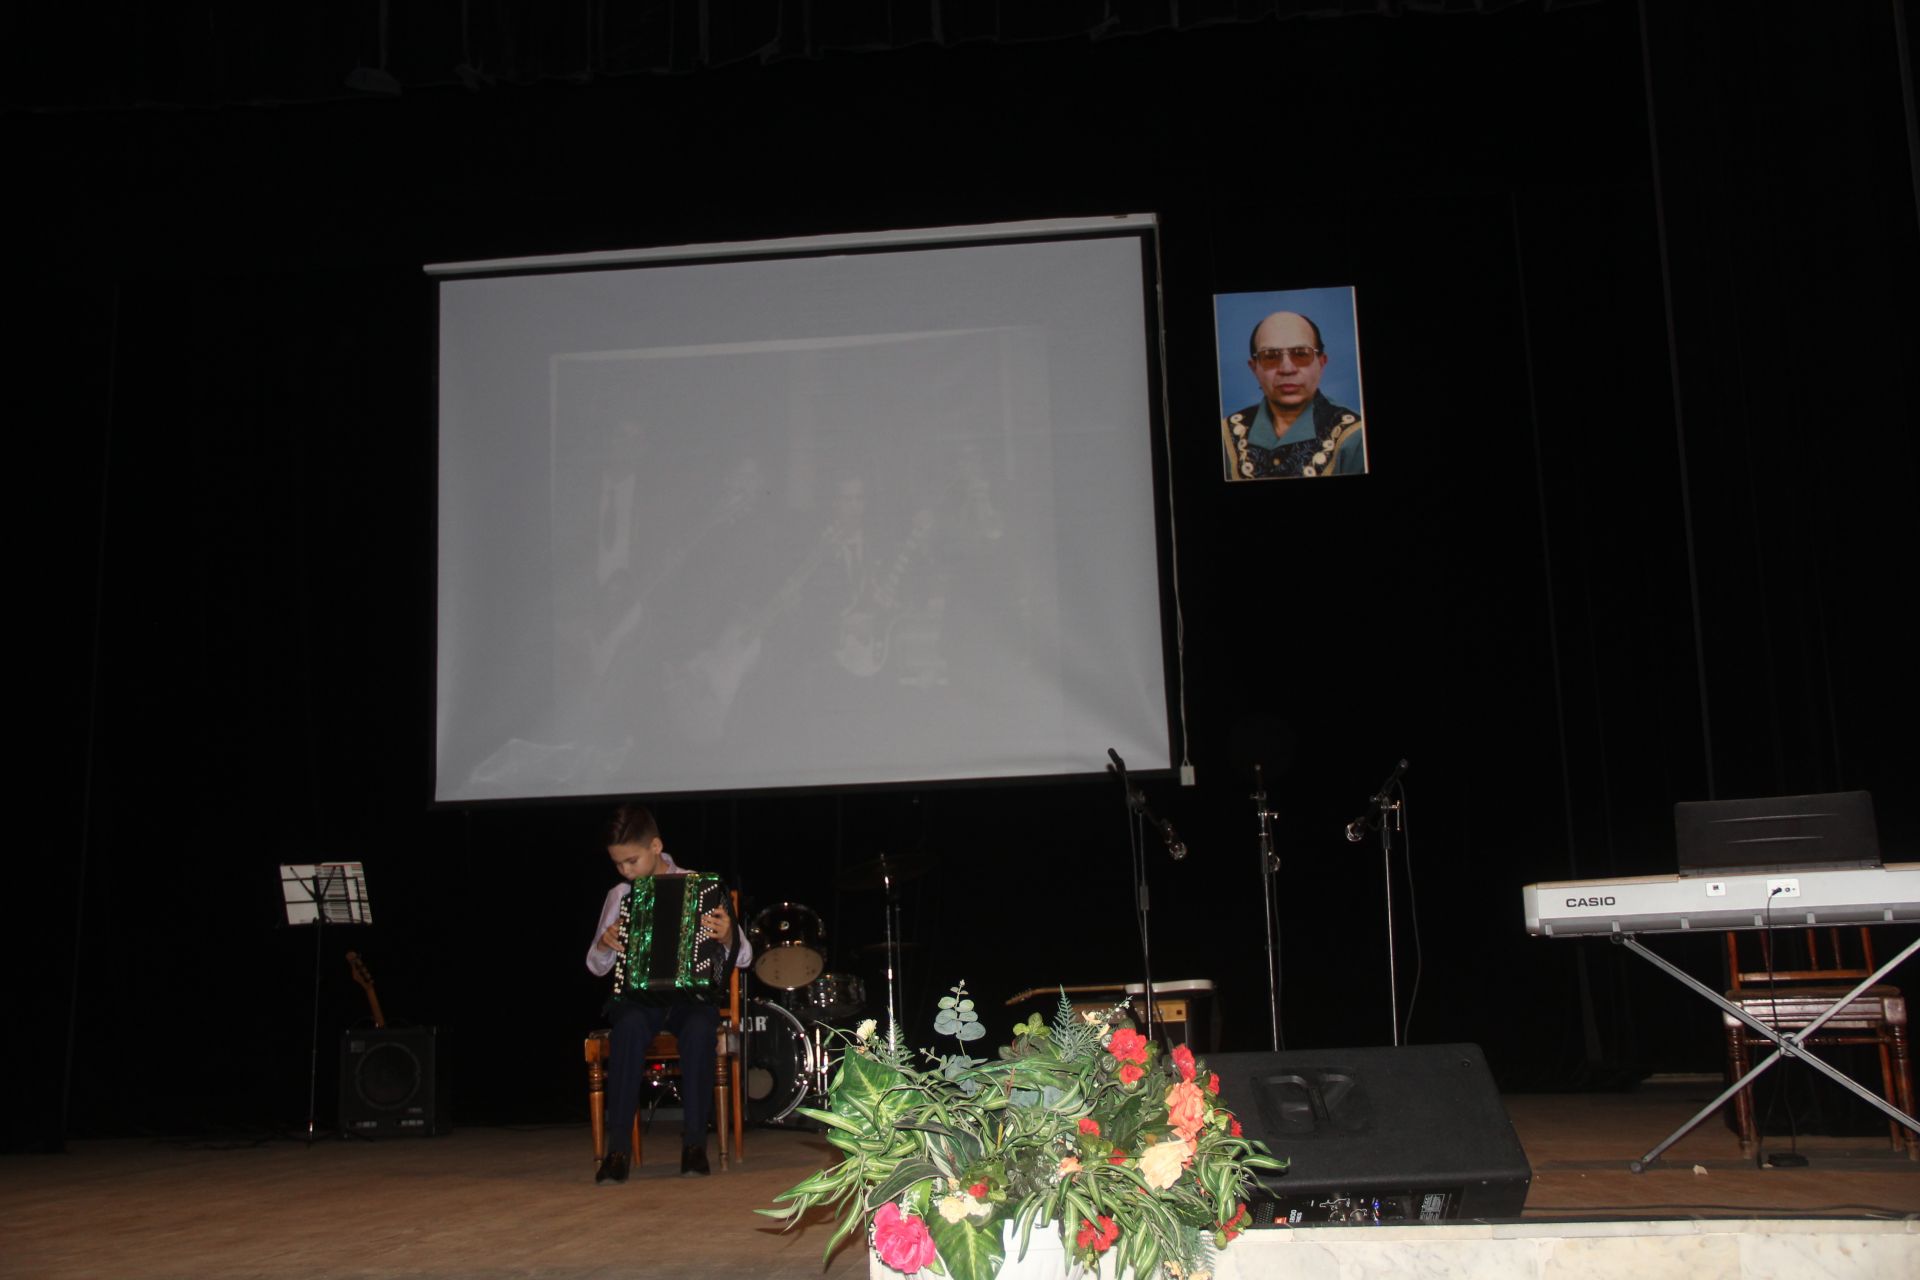 В Буинске состоялся вечер памяти Владислава Хмелева (ФОТО, ВИДЕО)